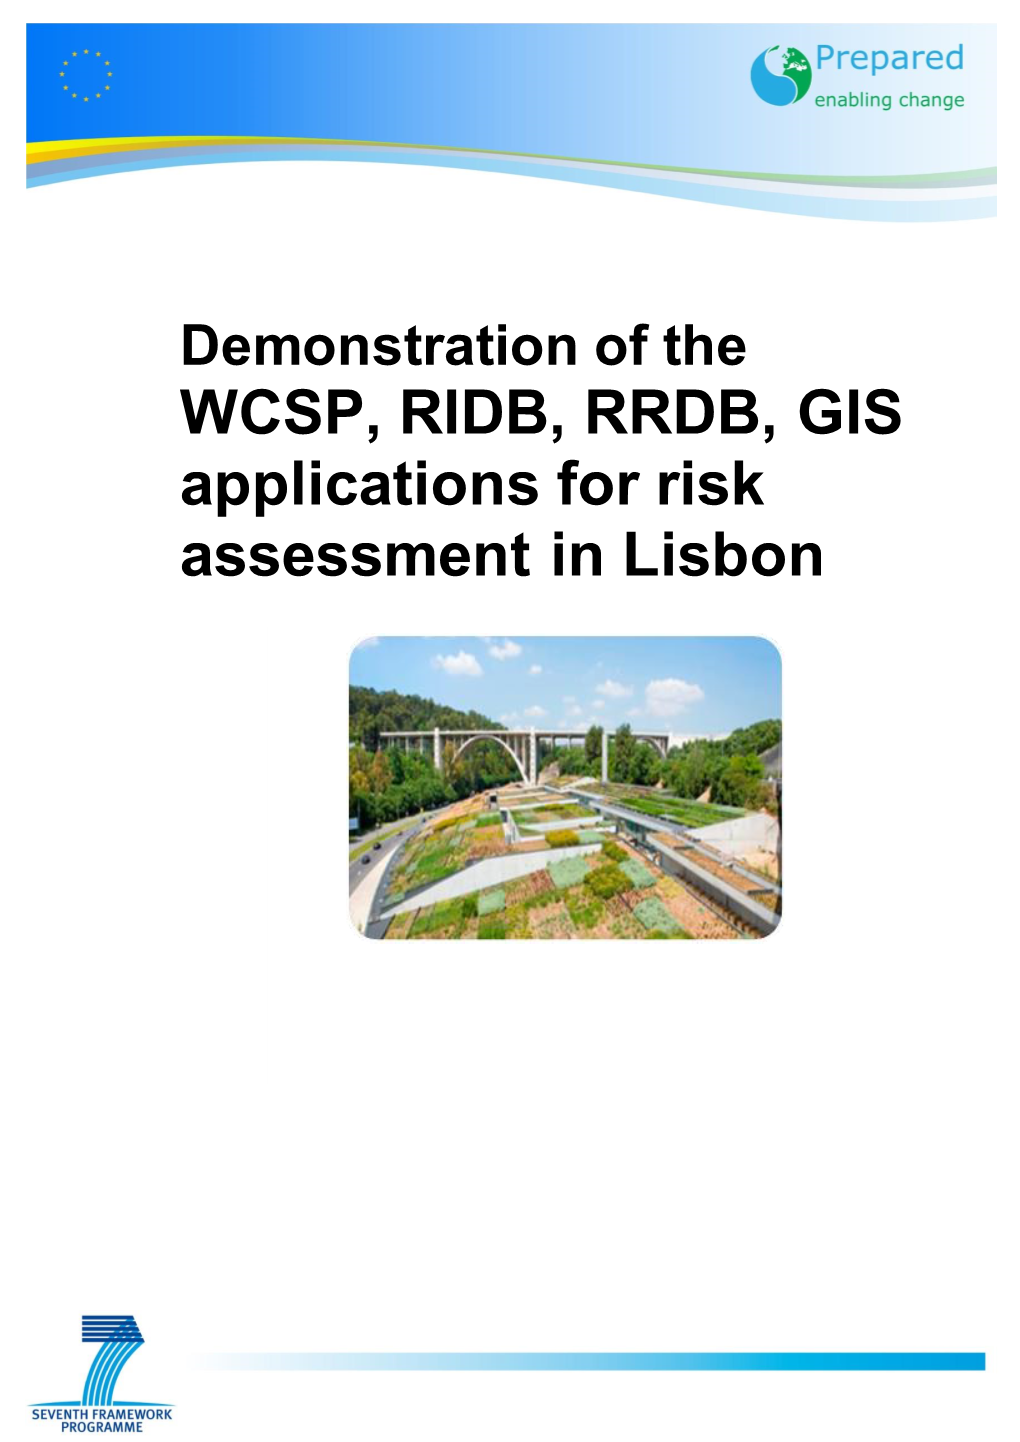 WCSP, RIDB, RRDB, GIS Applications for Risk Assessment in Lisbon